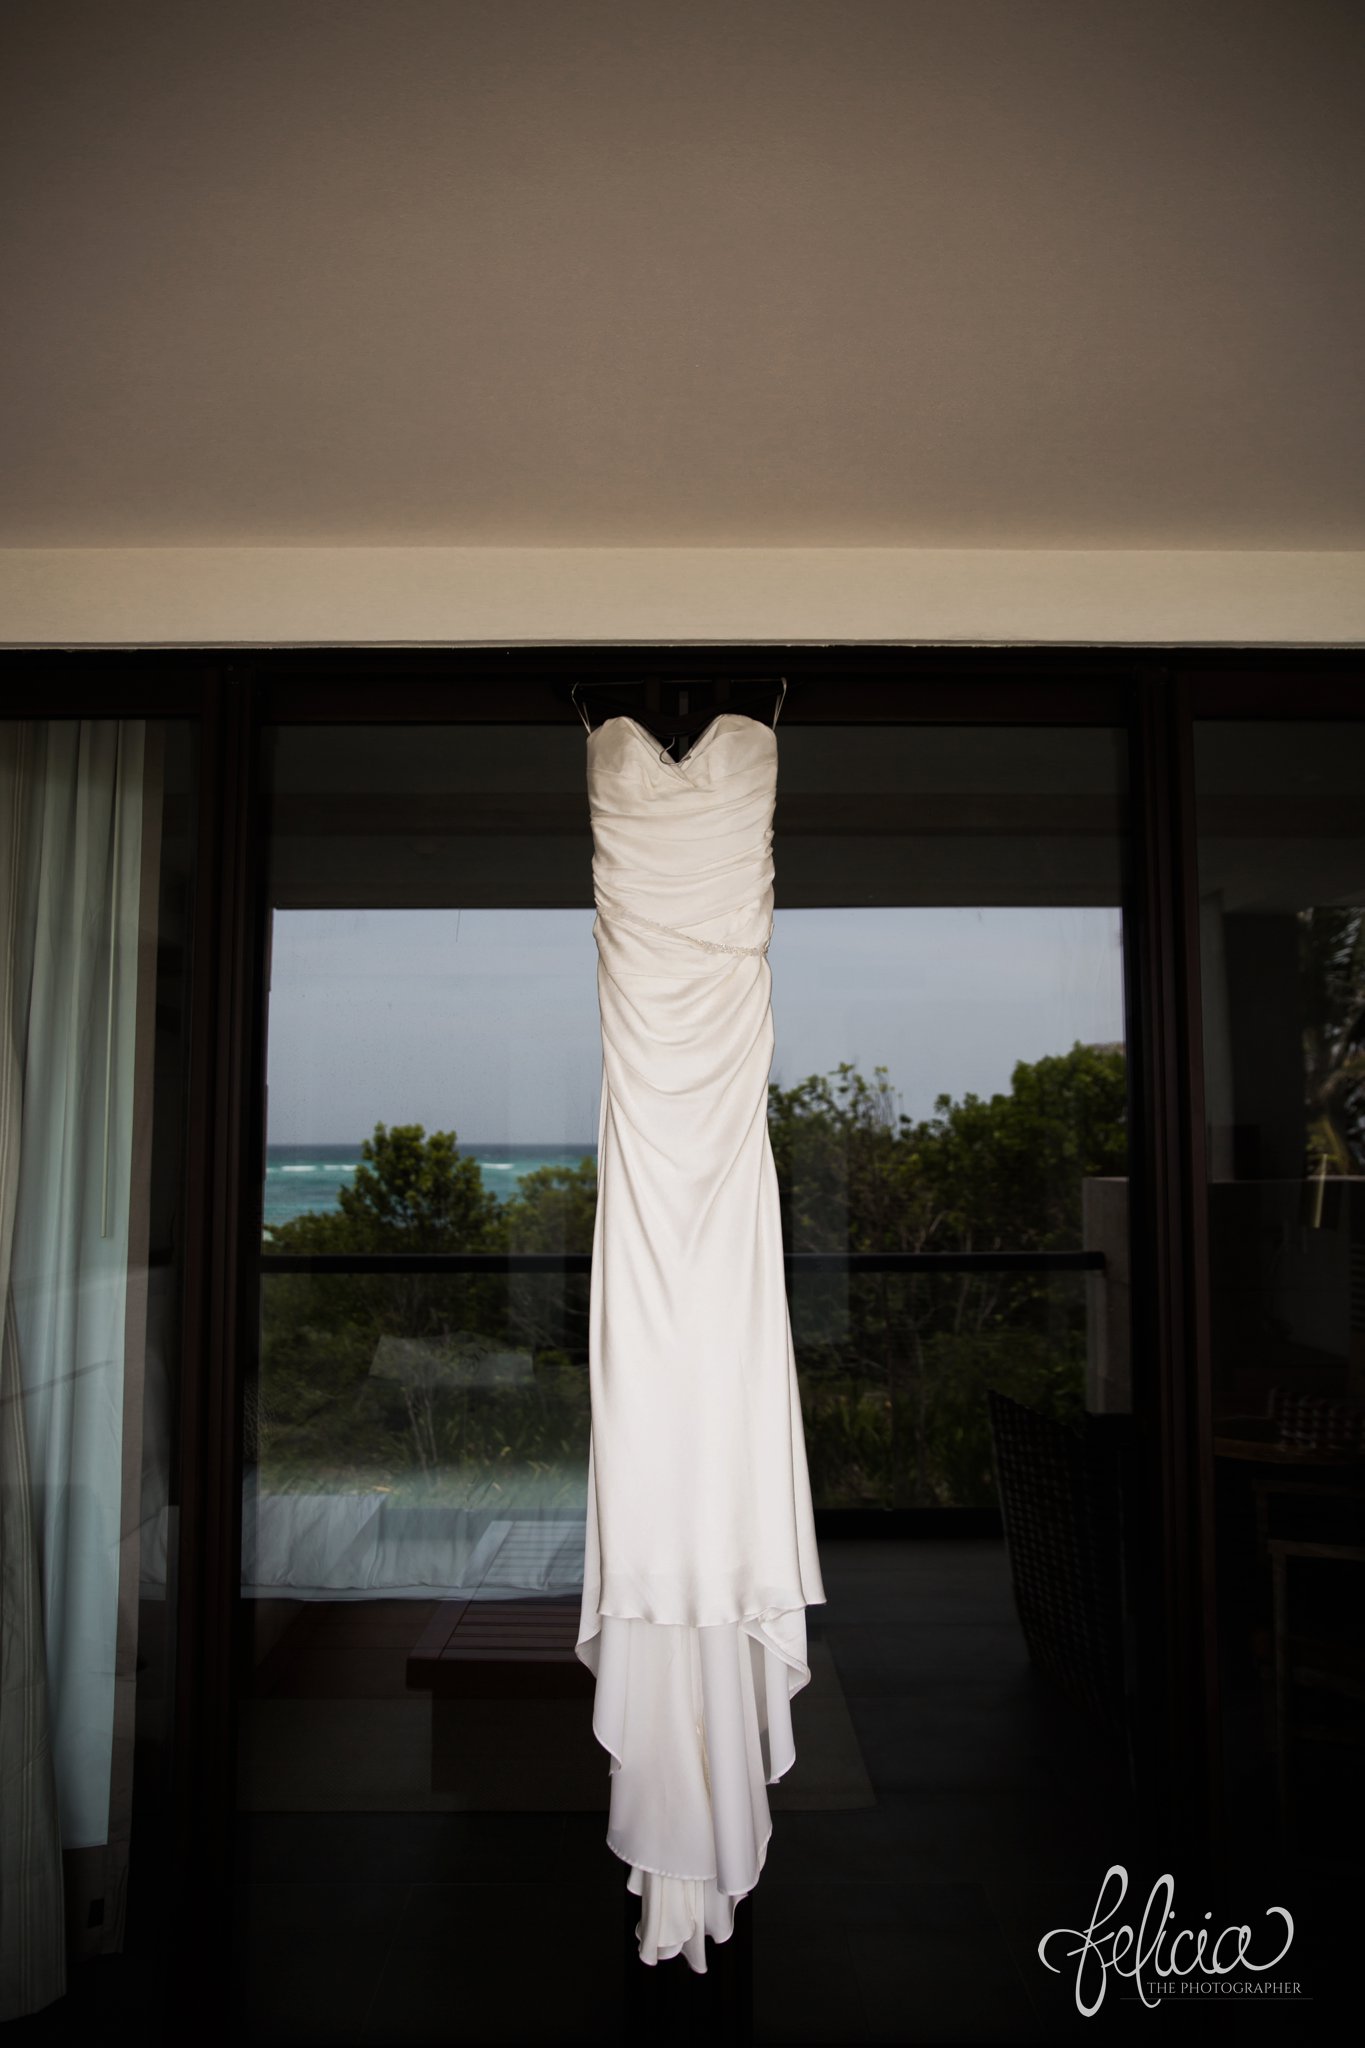 images by feliciathephotographer.com | Destination Beach Wedding | Unicco 20 87 | Photographer | L&S Travel | Casablanca Bridal | chic dress | ocean views | reflection 